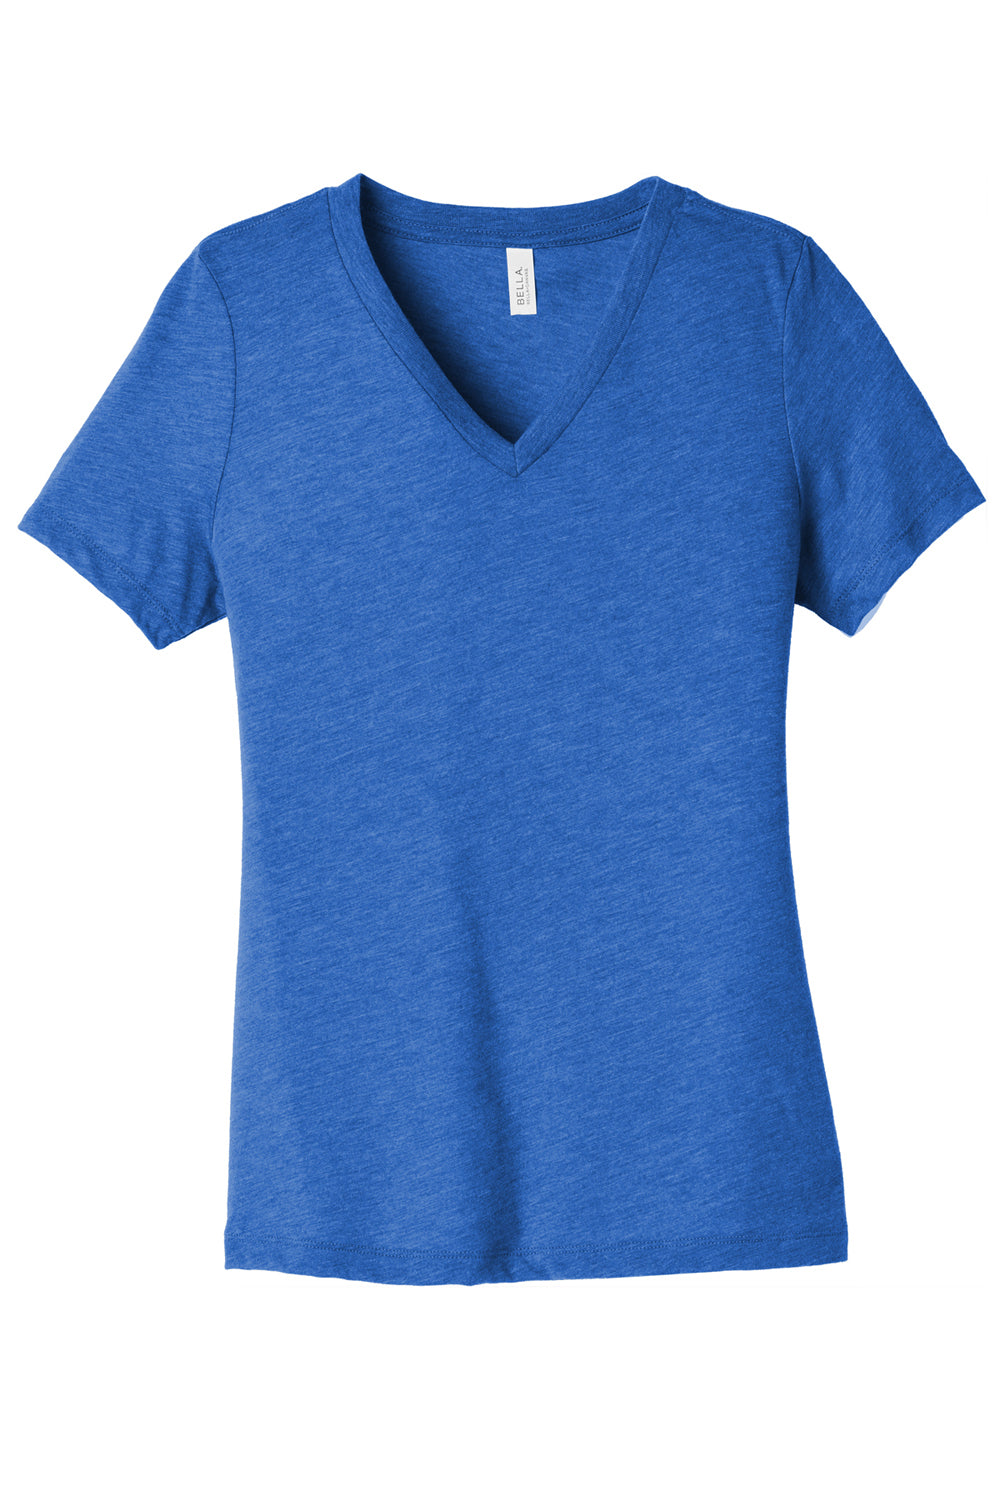 Bella + Canvas BC6415 Womens Short Sleeve V-Neck T-Shirt True Royal Blue Flat Front